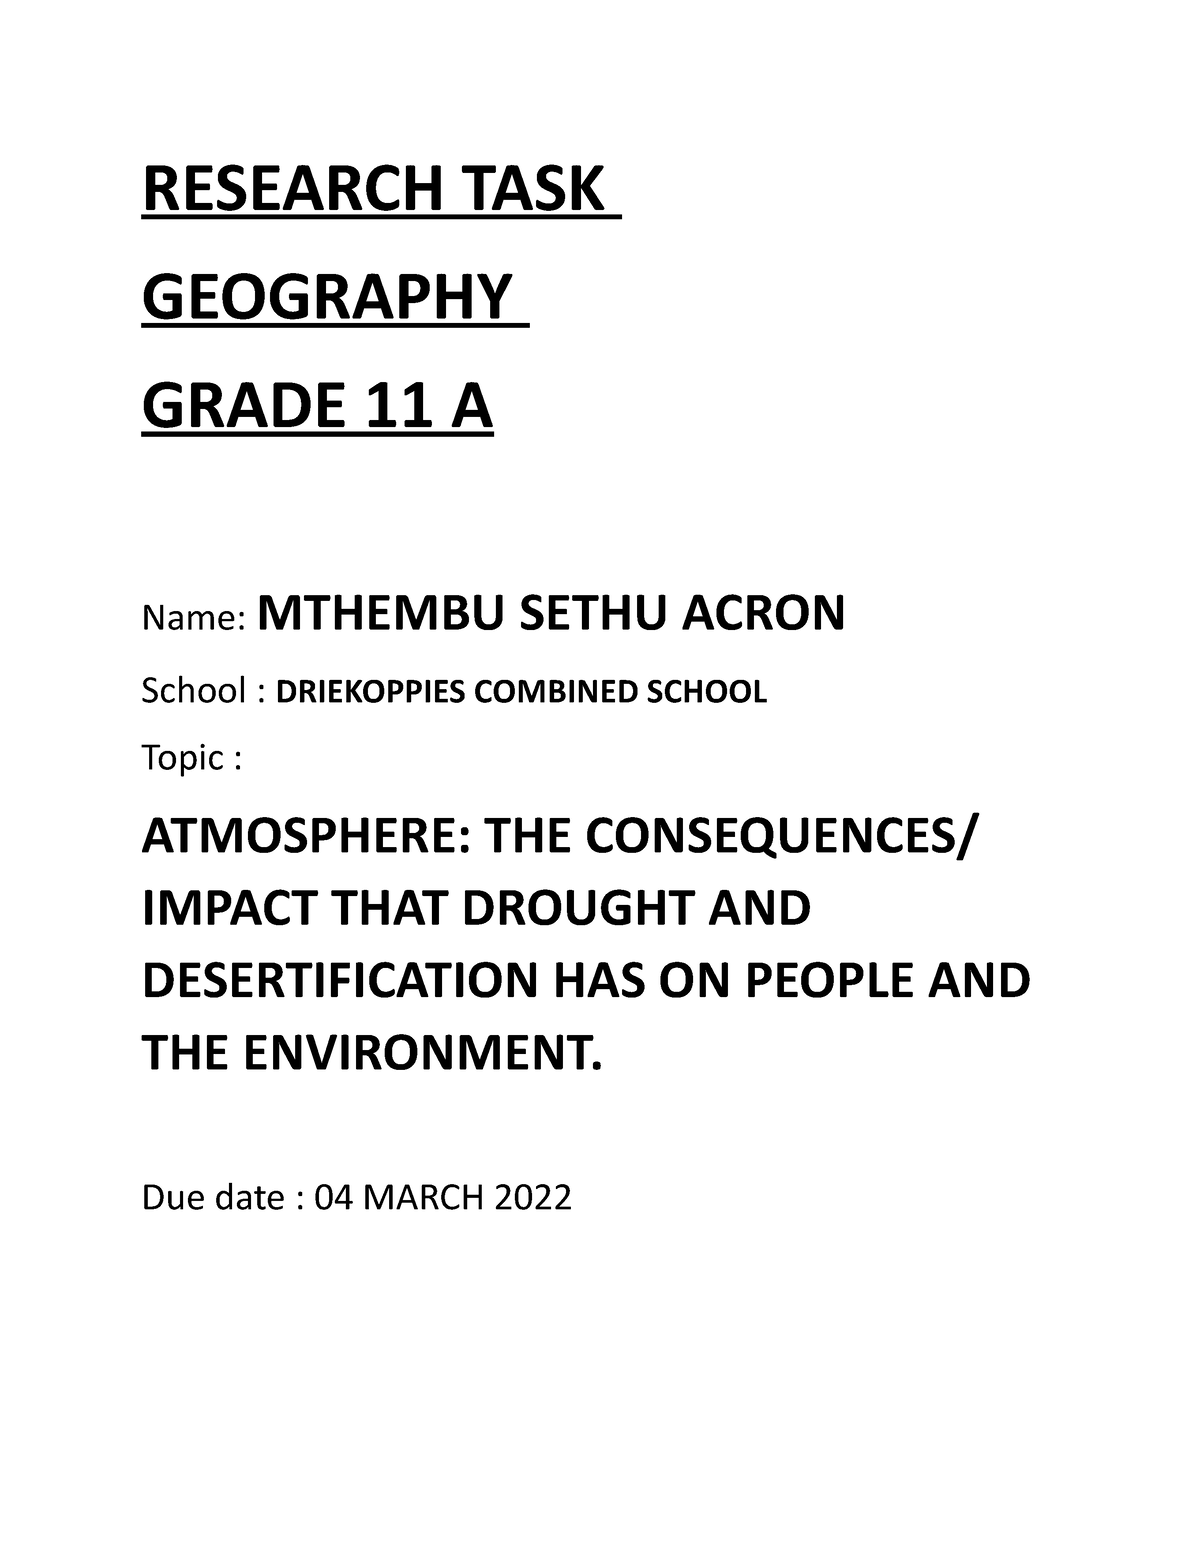 grade 11 geography assignment term 1 drought memorandum